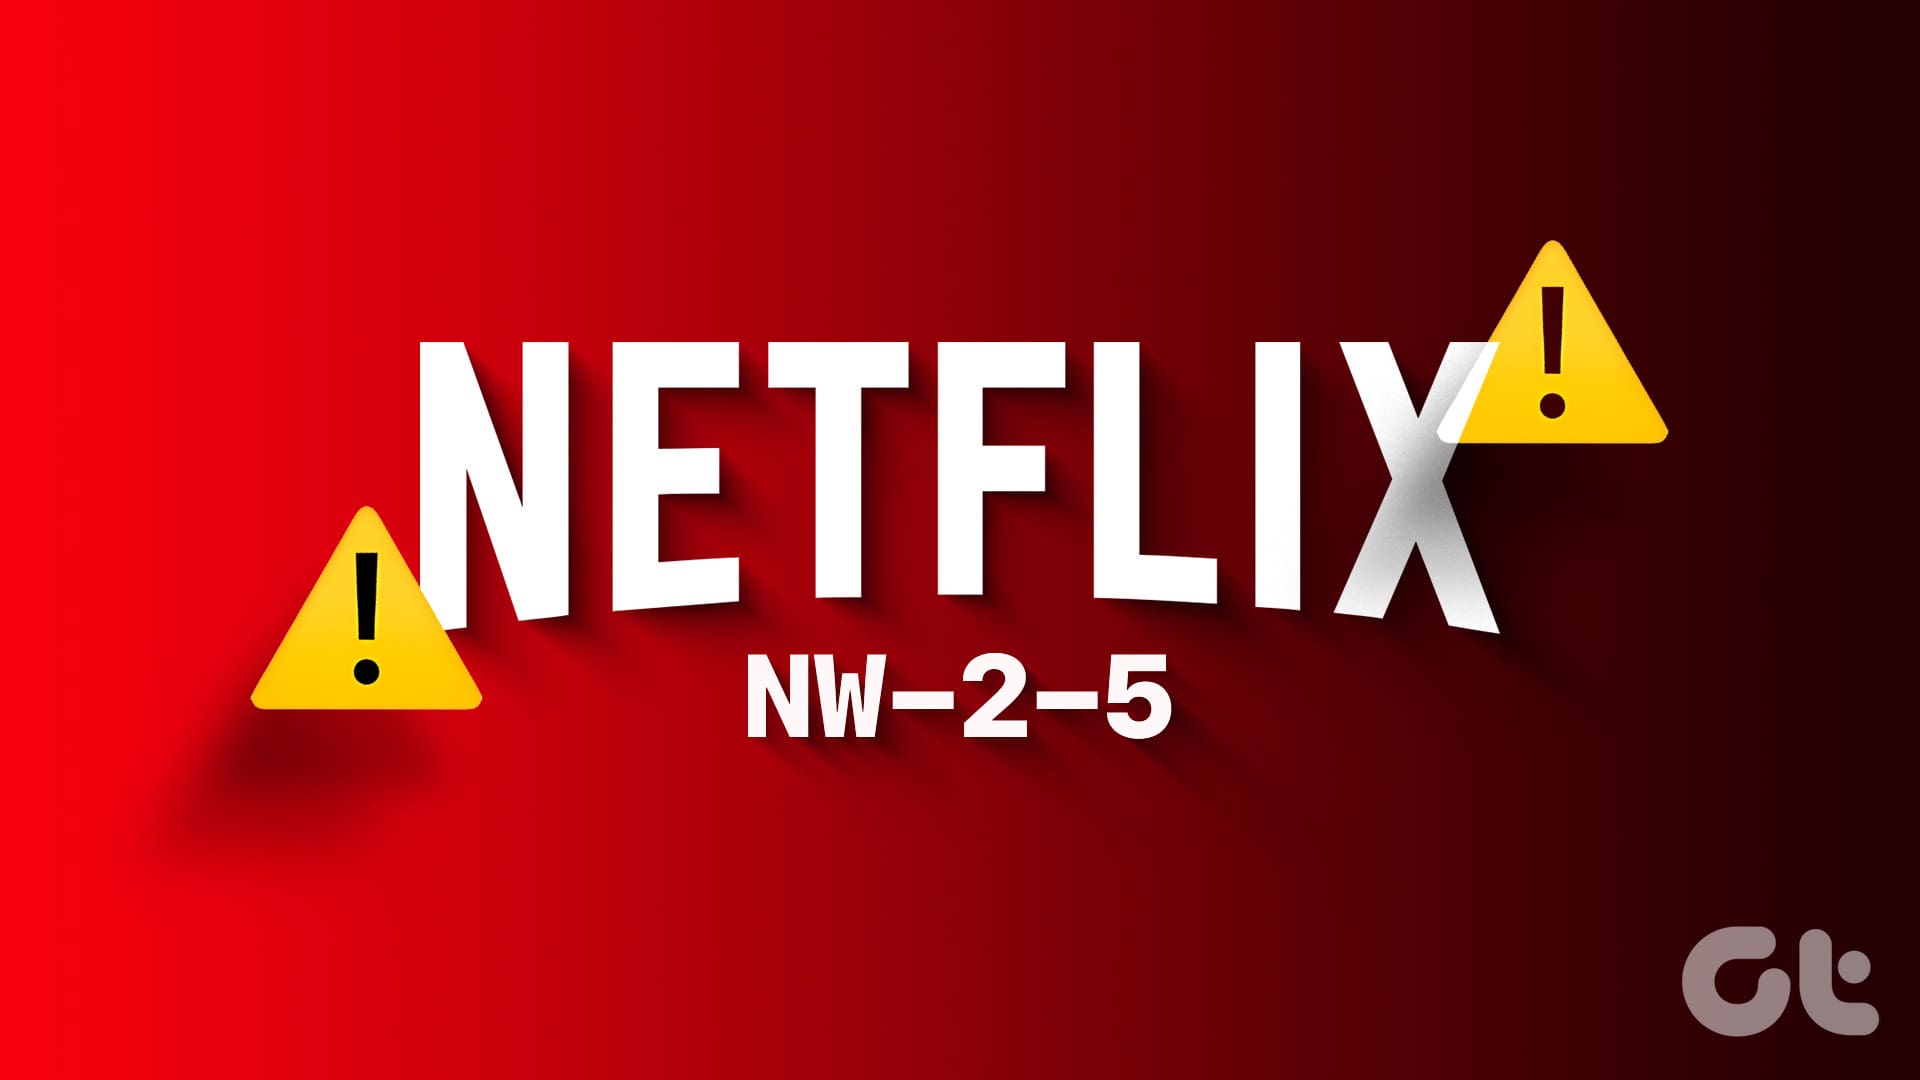 Netflix error NW-3-6 [SOLVED] 